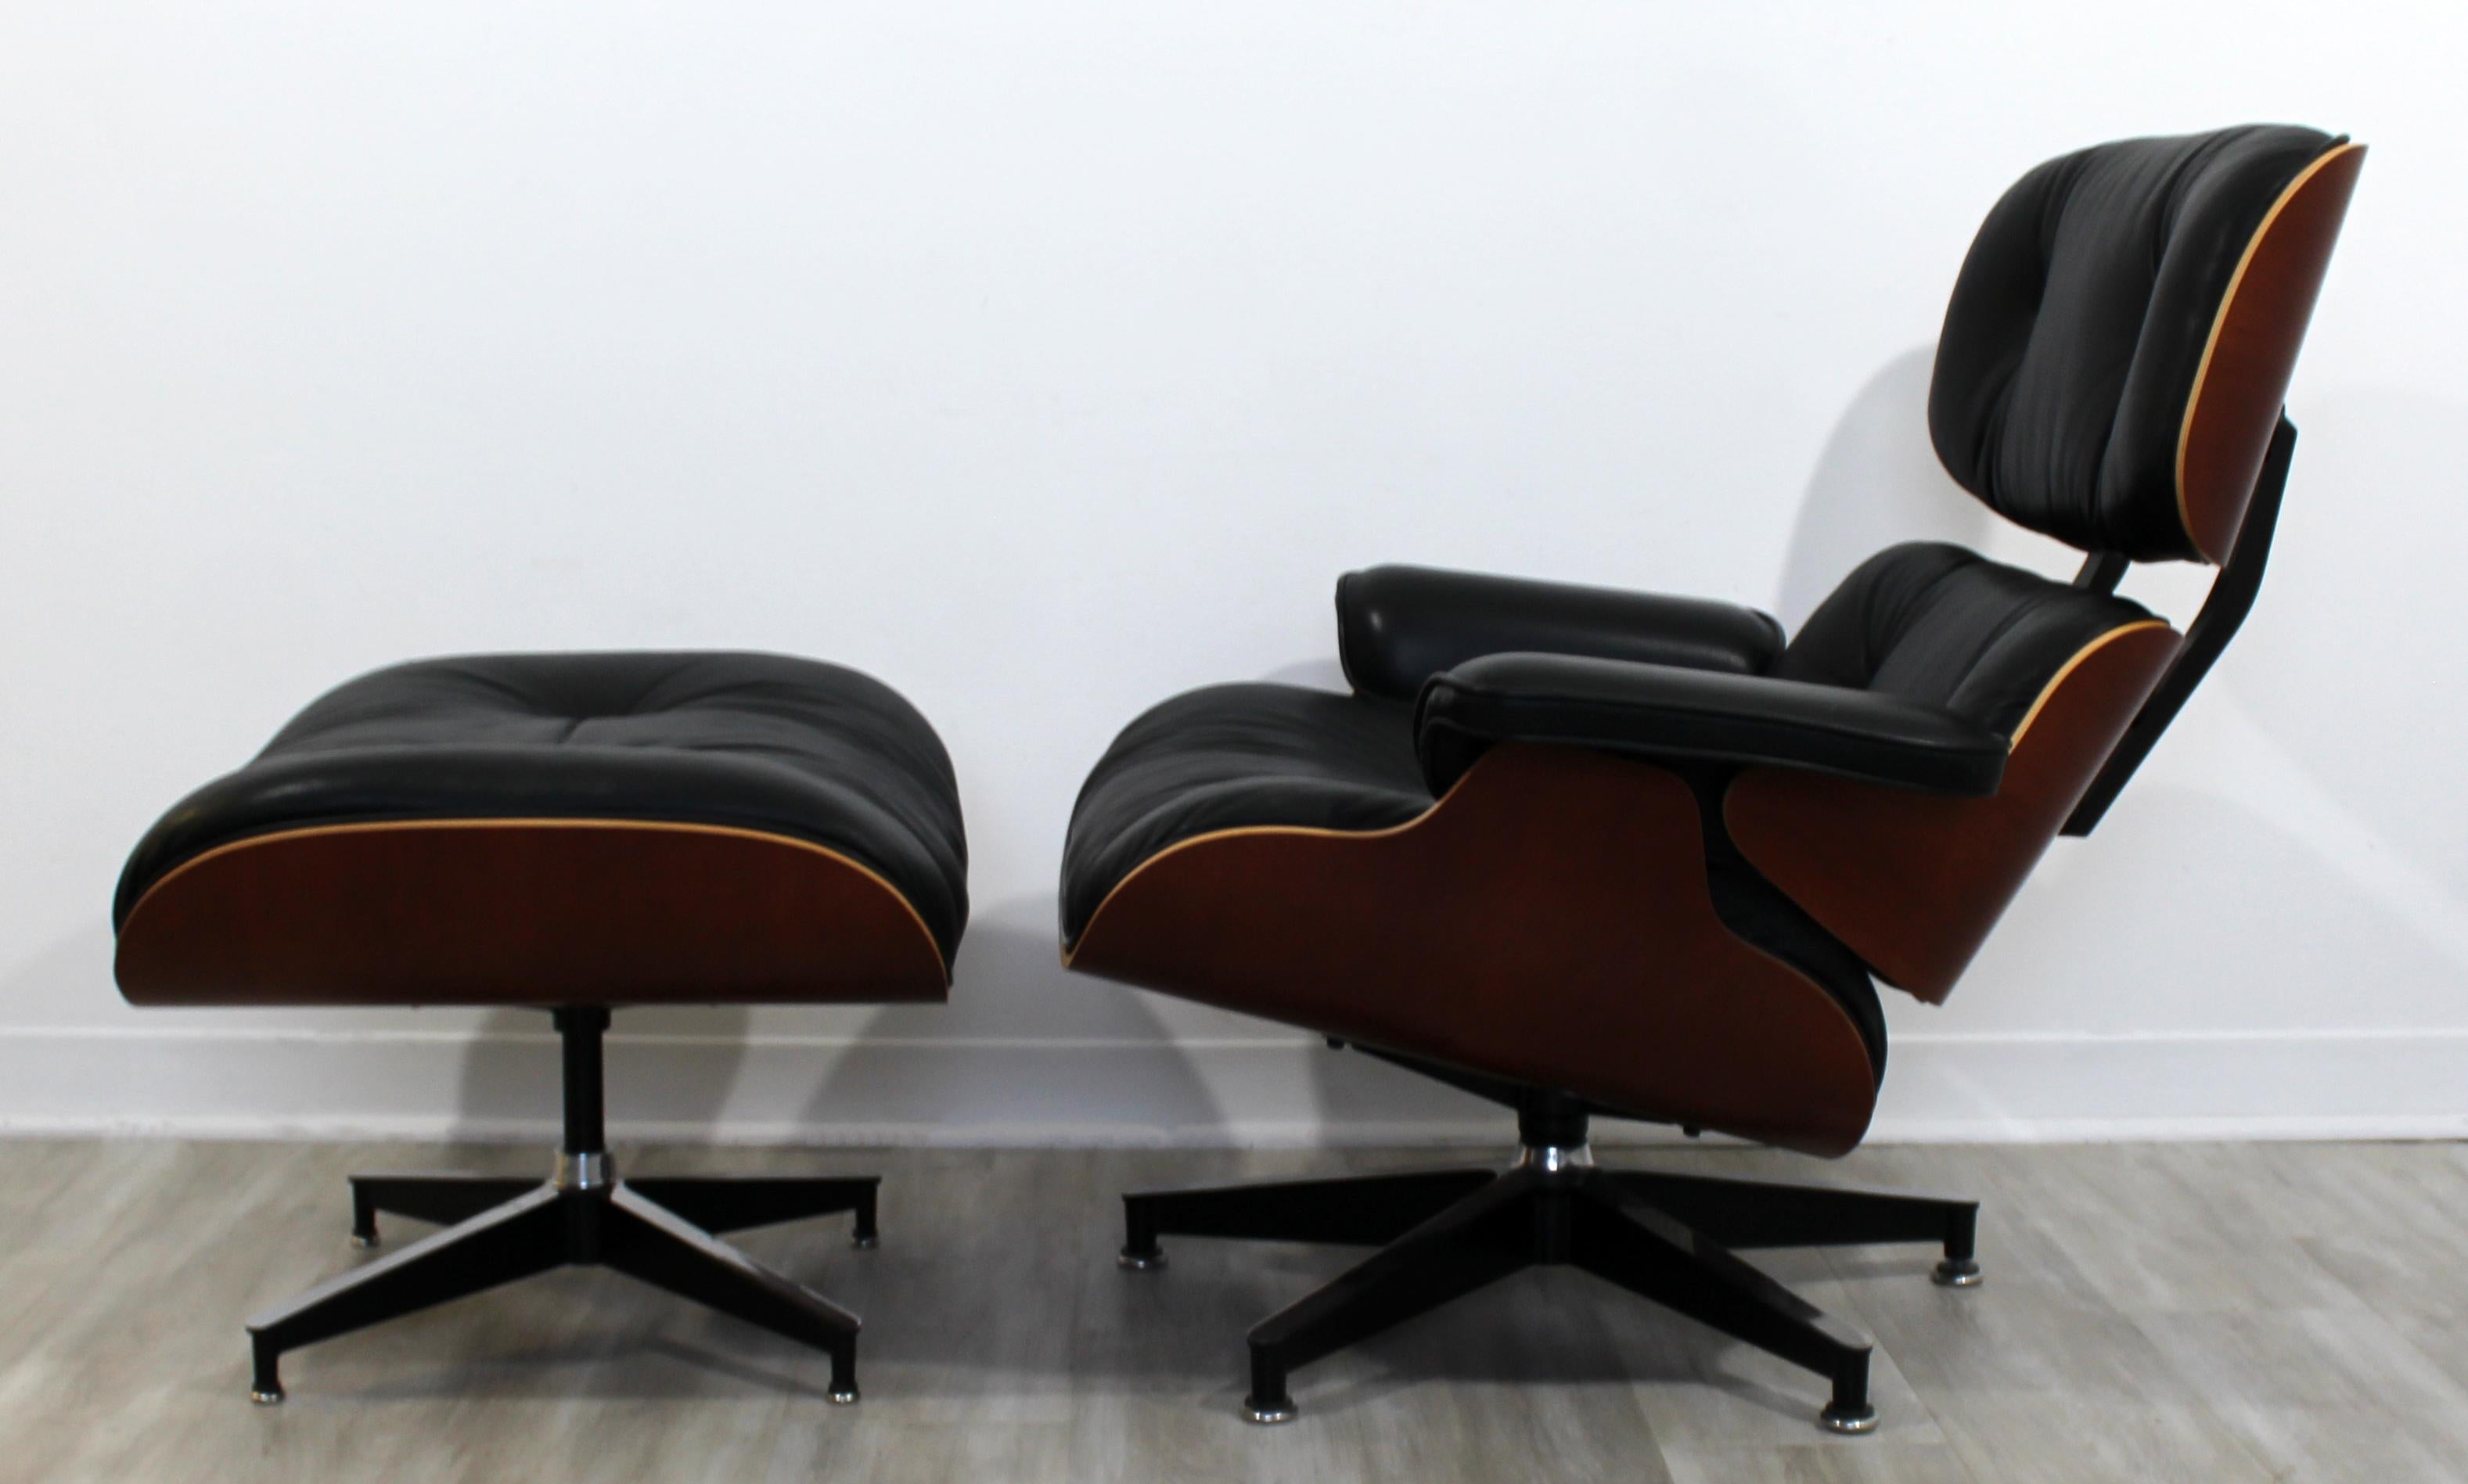 Late 20th Century Mid-Century Modern Eames Herman Miller Classic Walnut Lounge Chair Ottoman 1980s